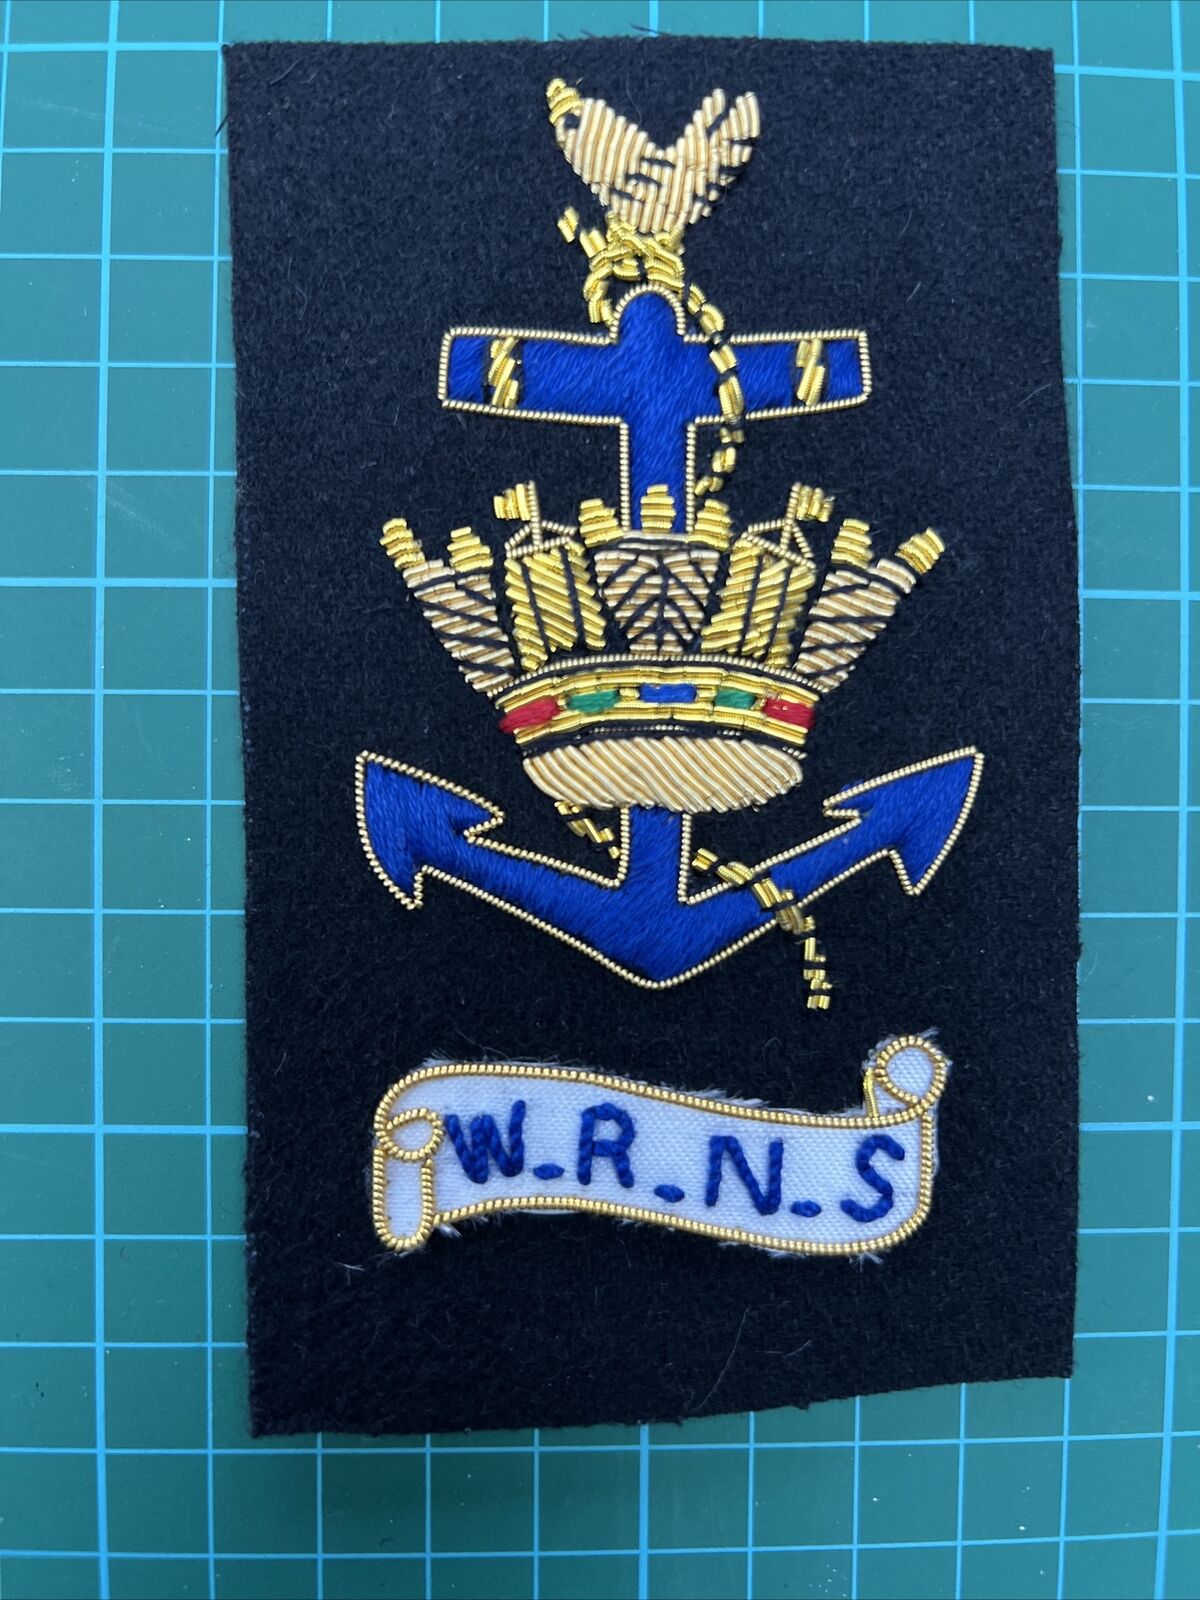 WRNS, Wrens, Women’s Royal Naval Service